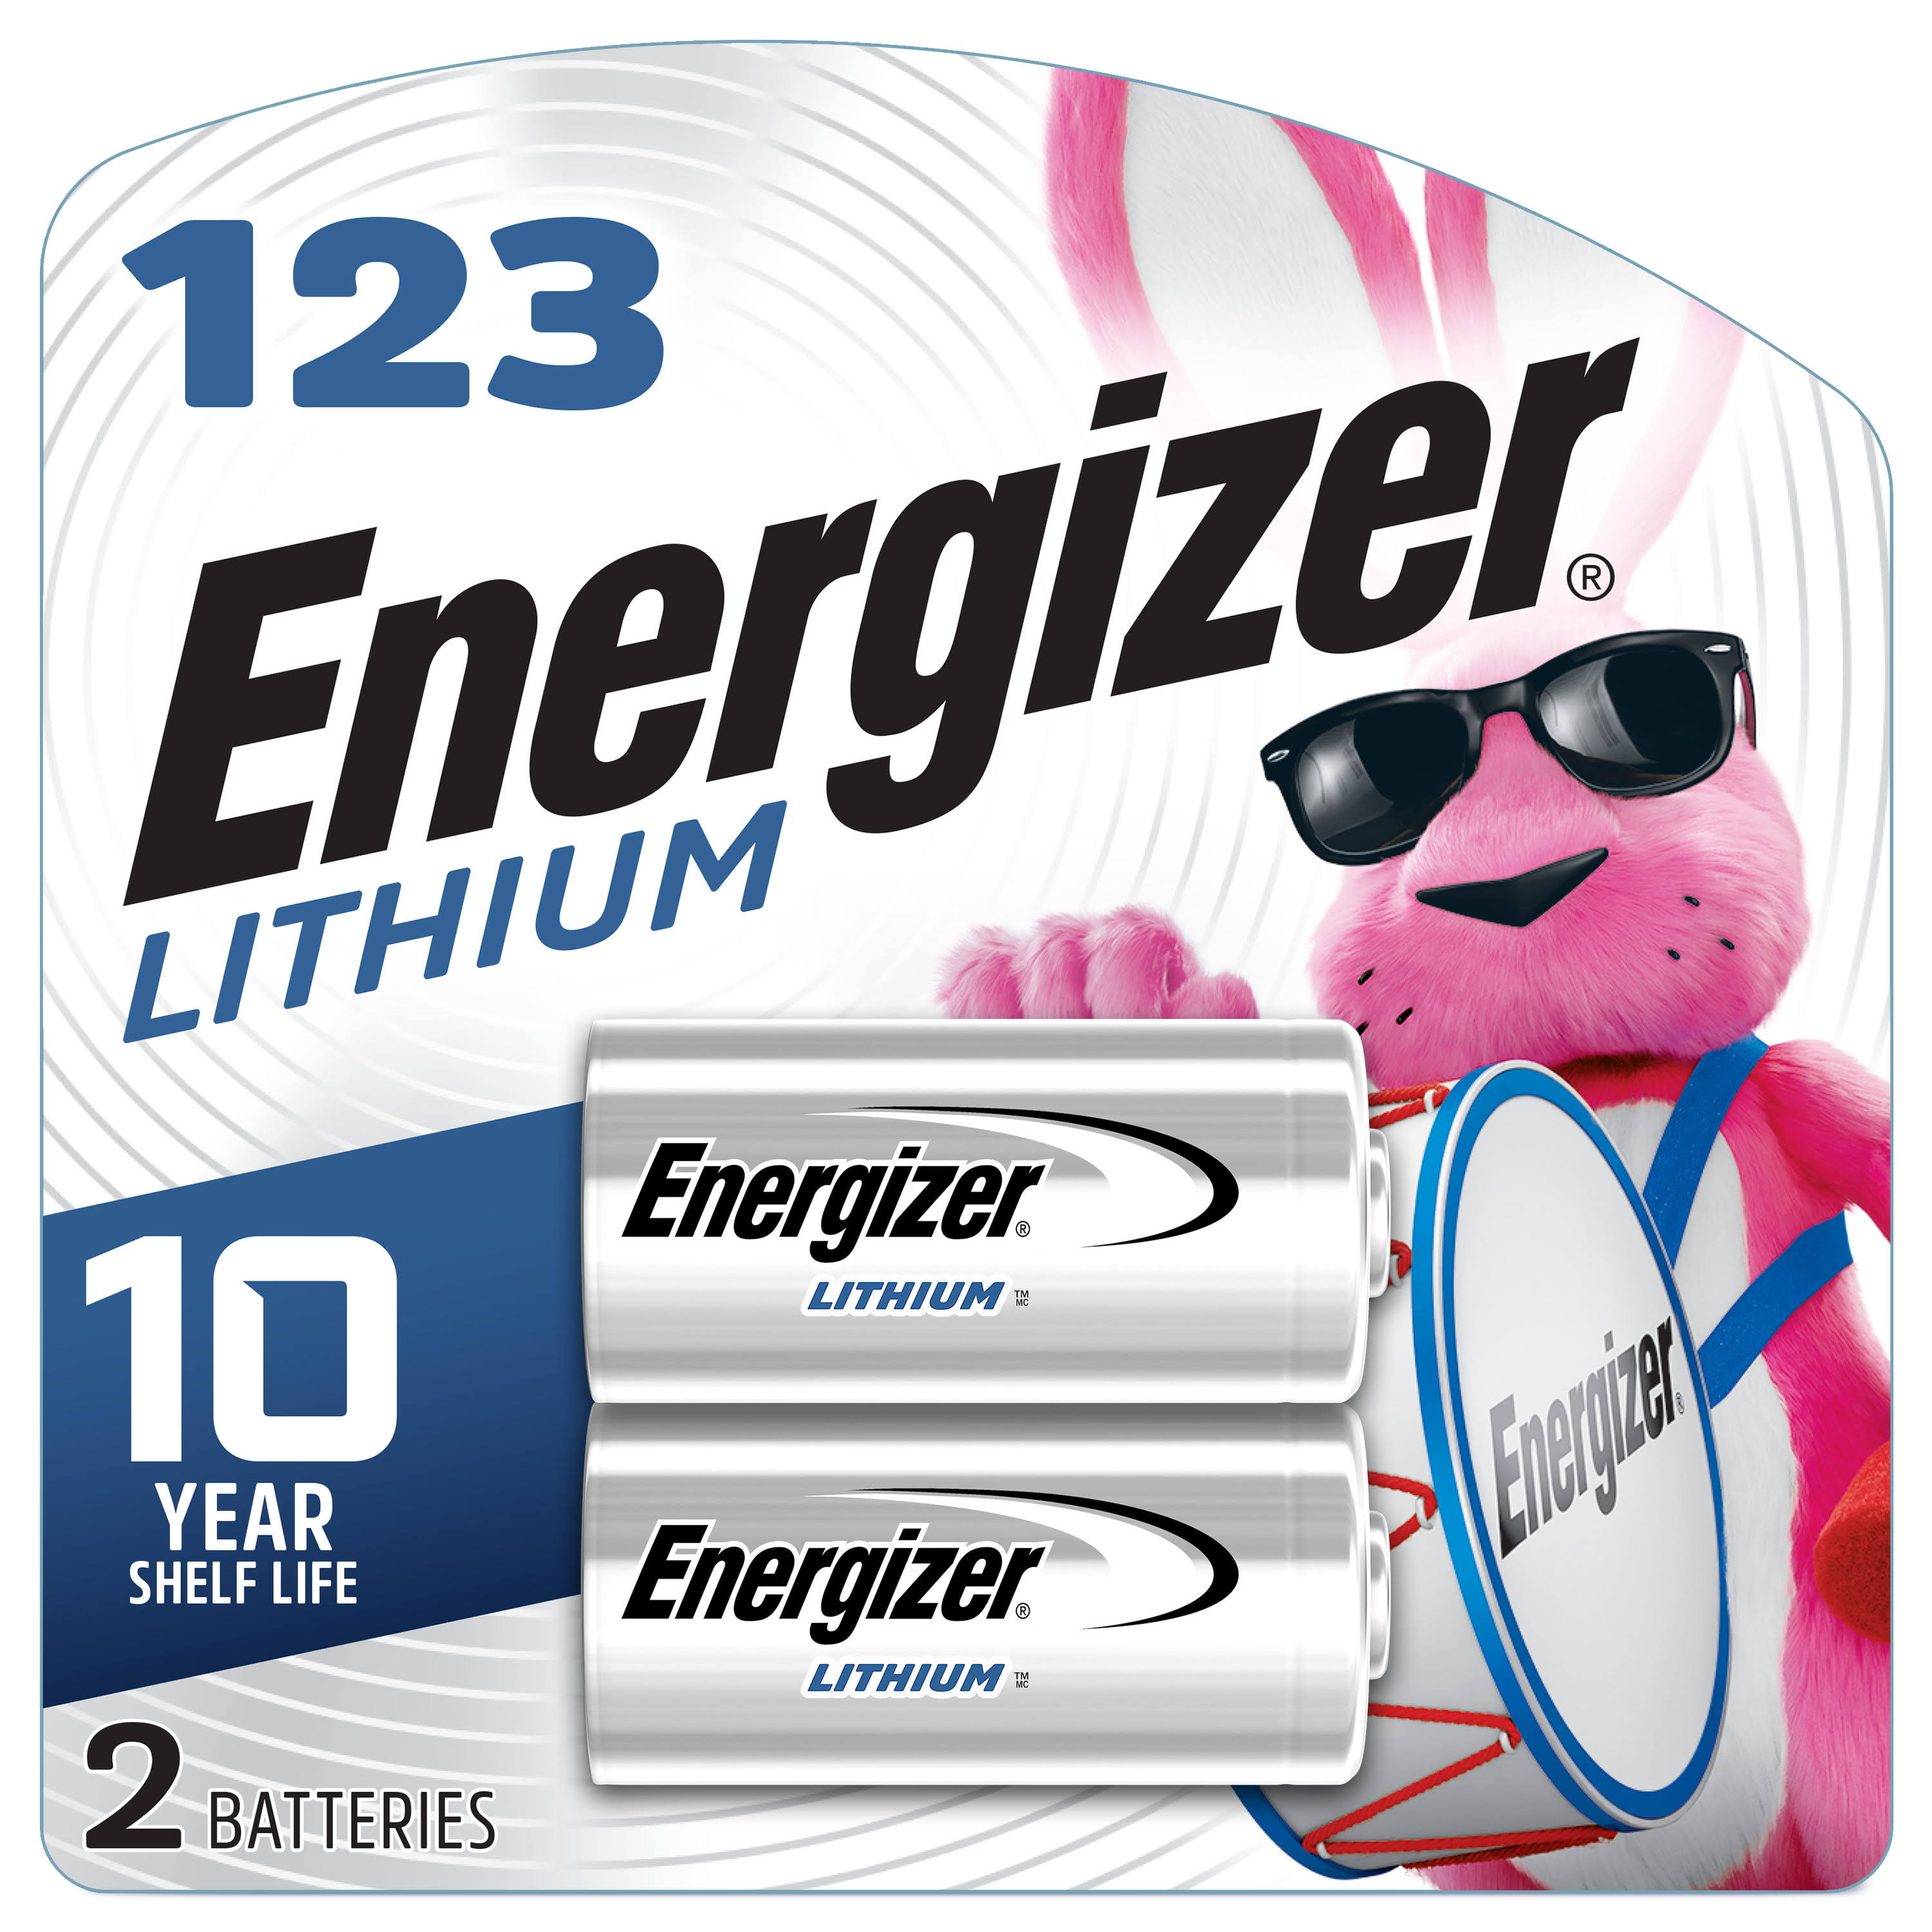 Energizer 123 Lithium Battery - 3V, x2